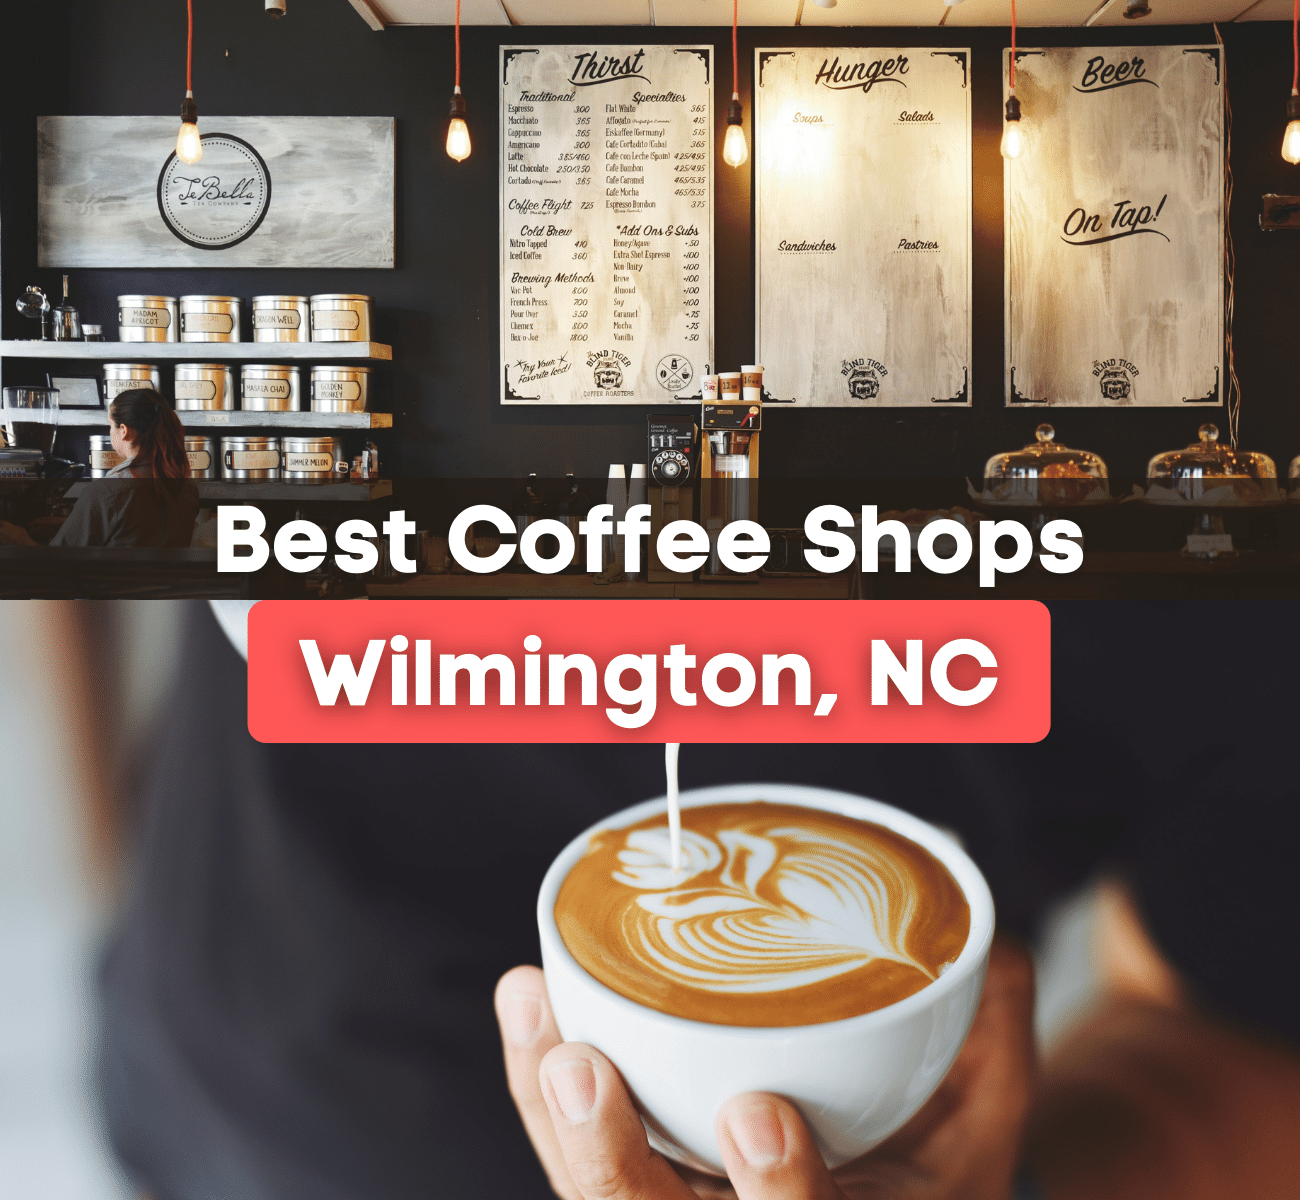 Best Coffee Shops in Wilmington NC